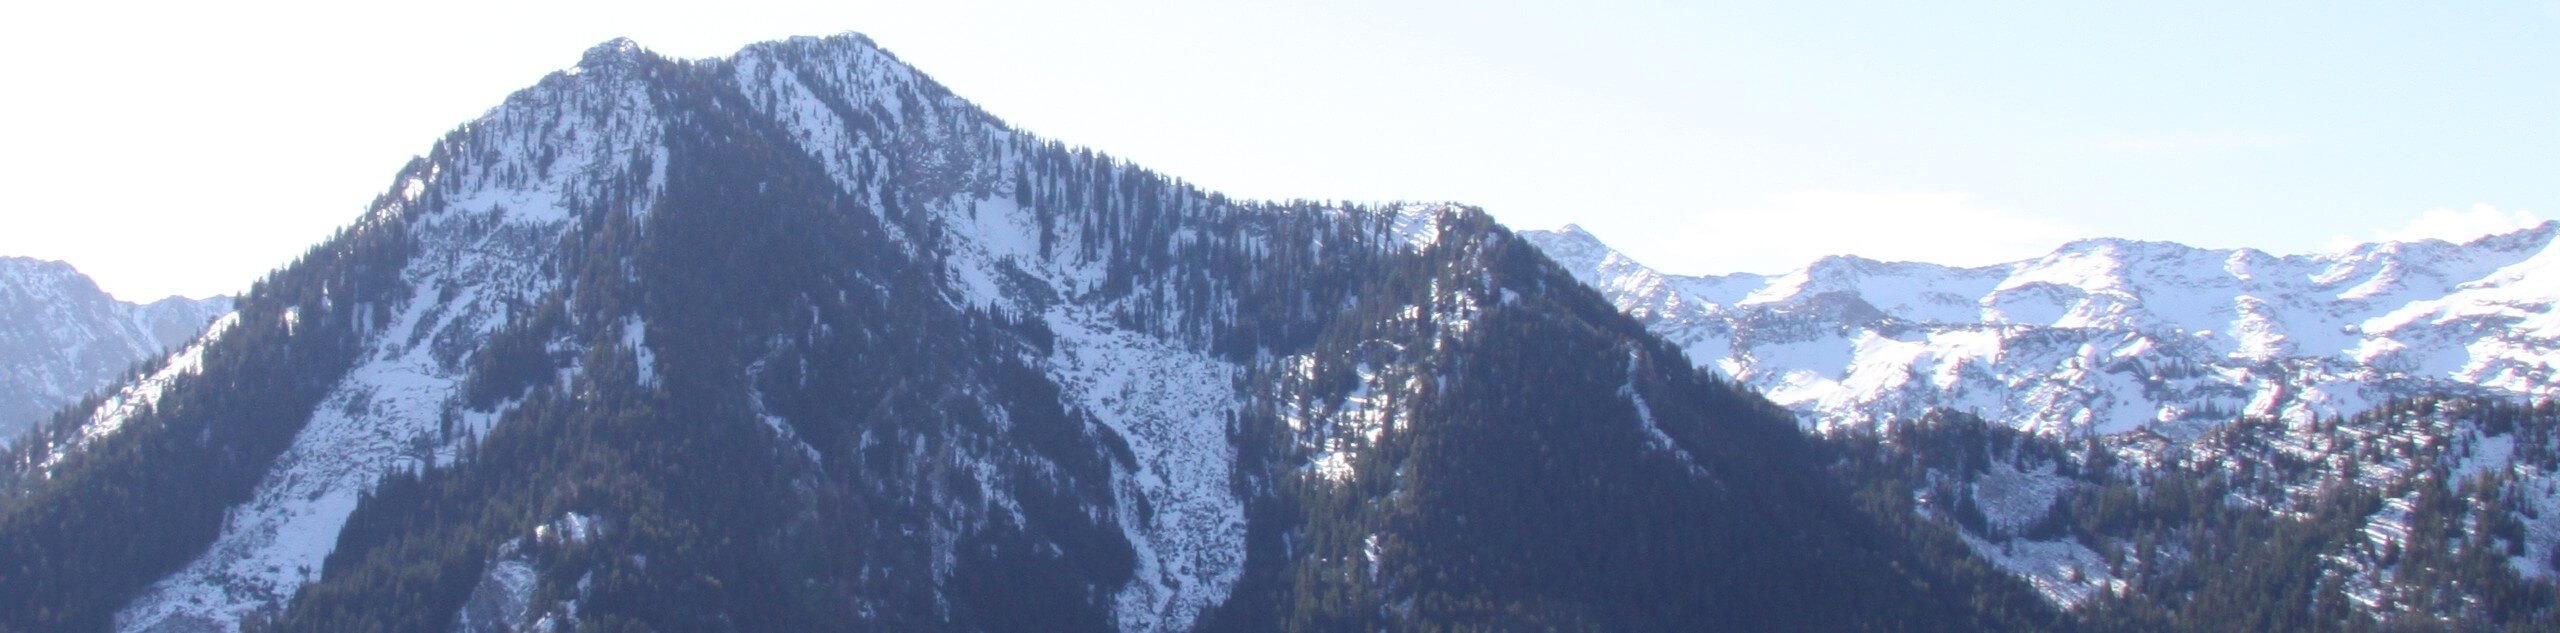 Kessler Peak Trail